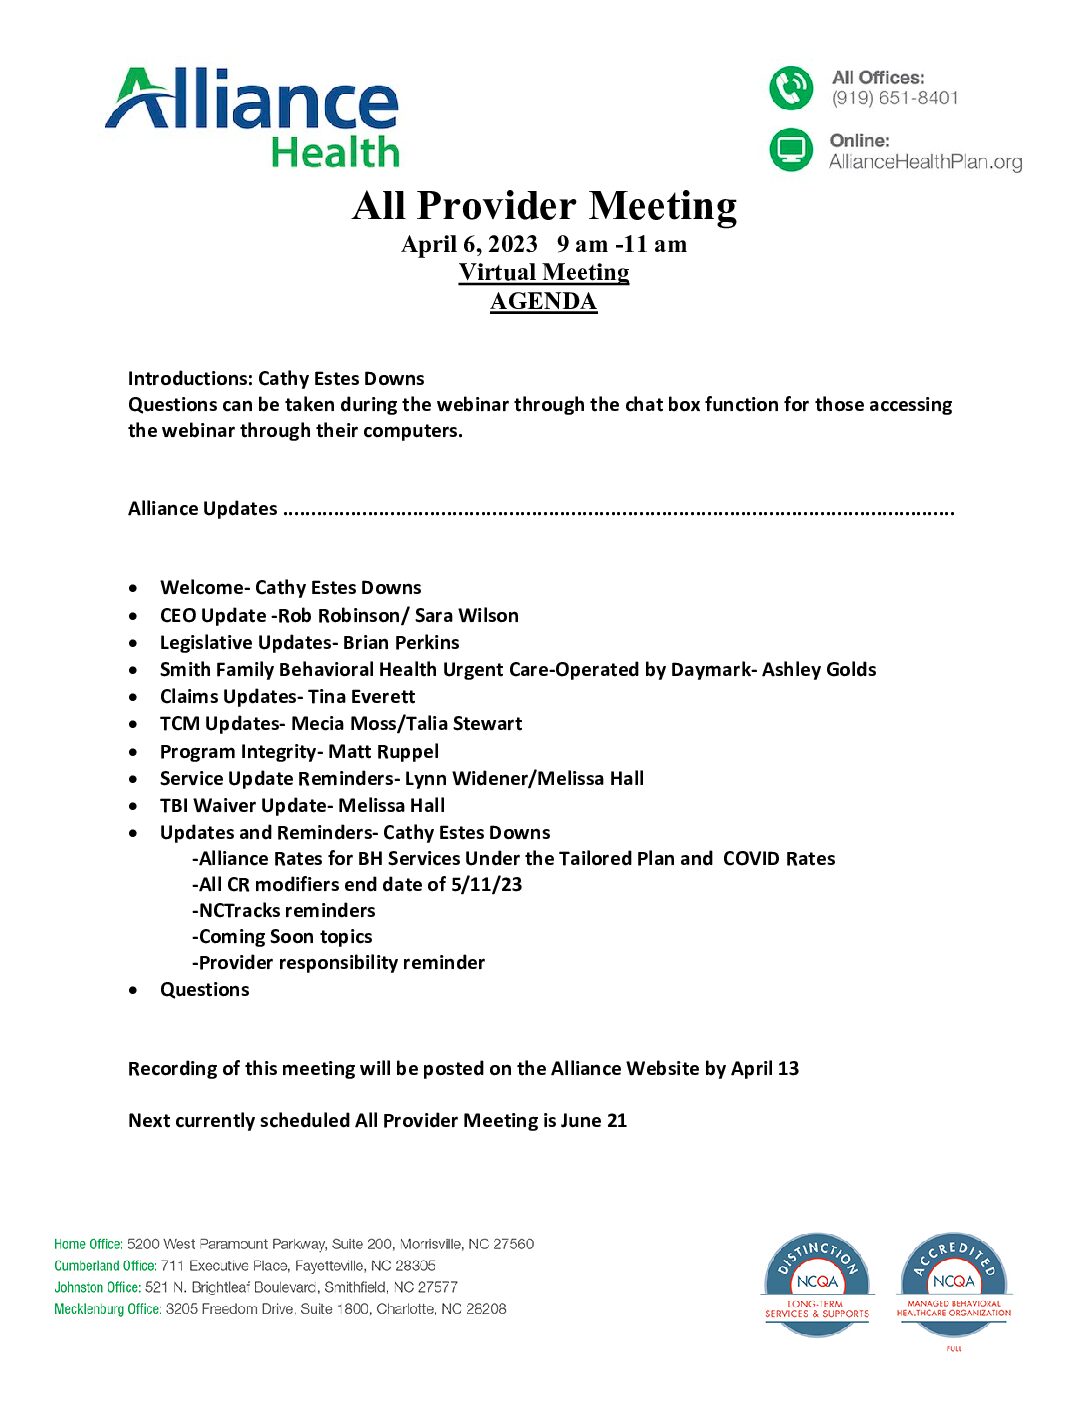 All Provider Meeting Agenda April 2023